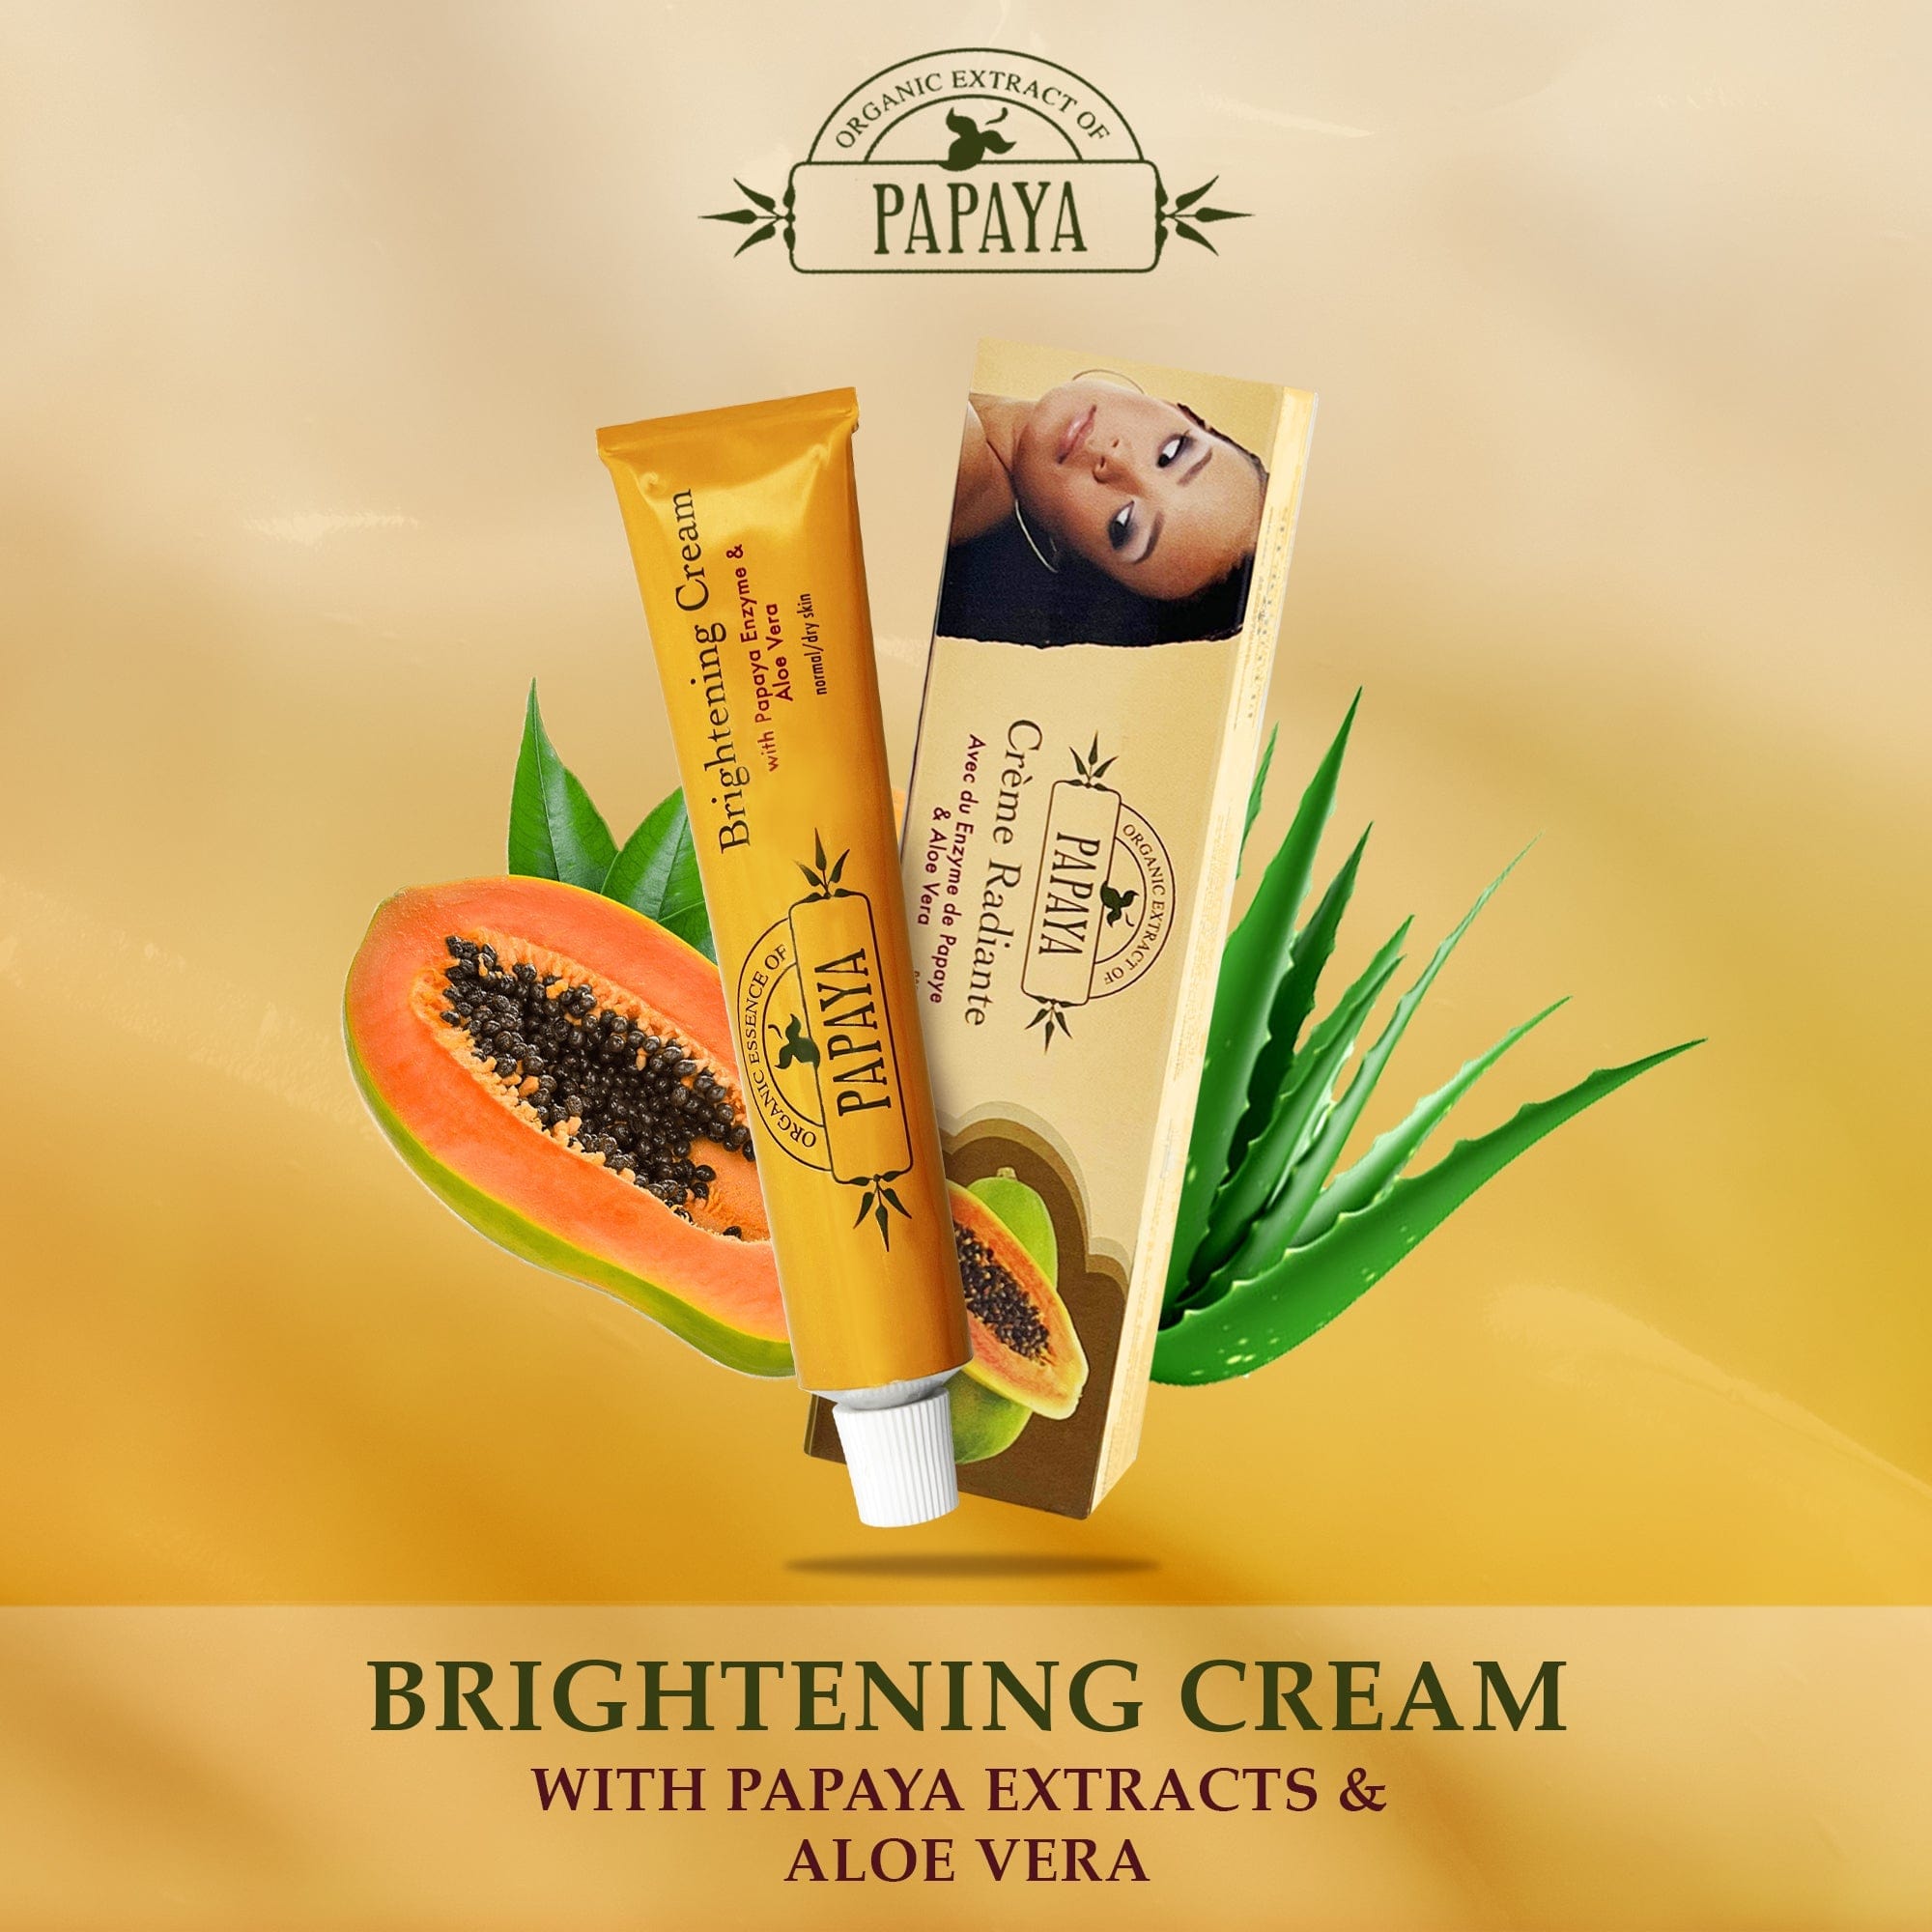 Organic Extract of Papaya Brightening Cream Tube - 50g / 1.76 Oz FleurDeLis - Mitchell Brands - Skin Lightening, Skin Brightening, Fade Dark Spots, Shea Butter, Hair Growth Products